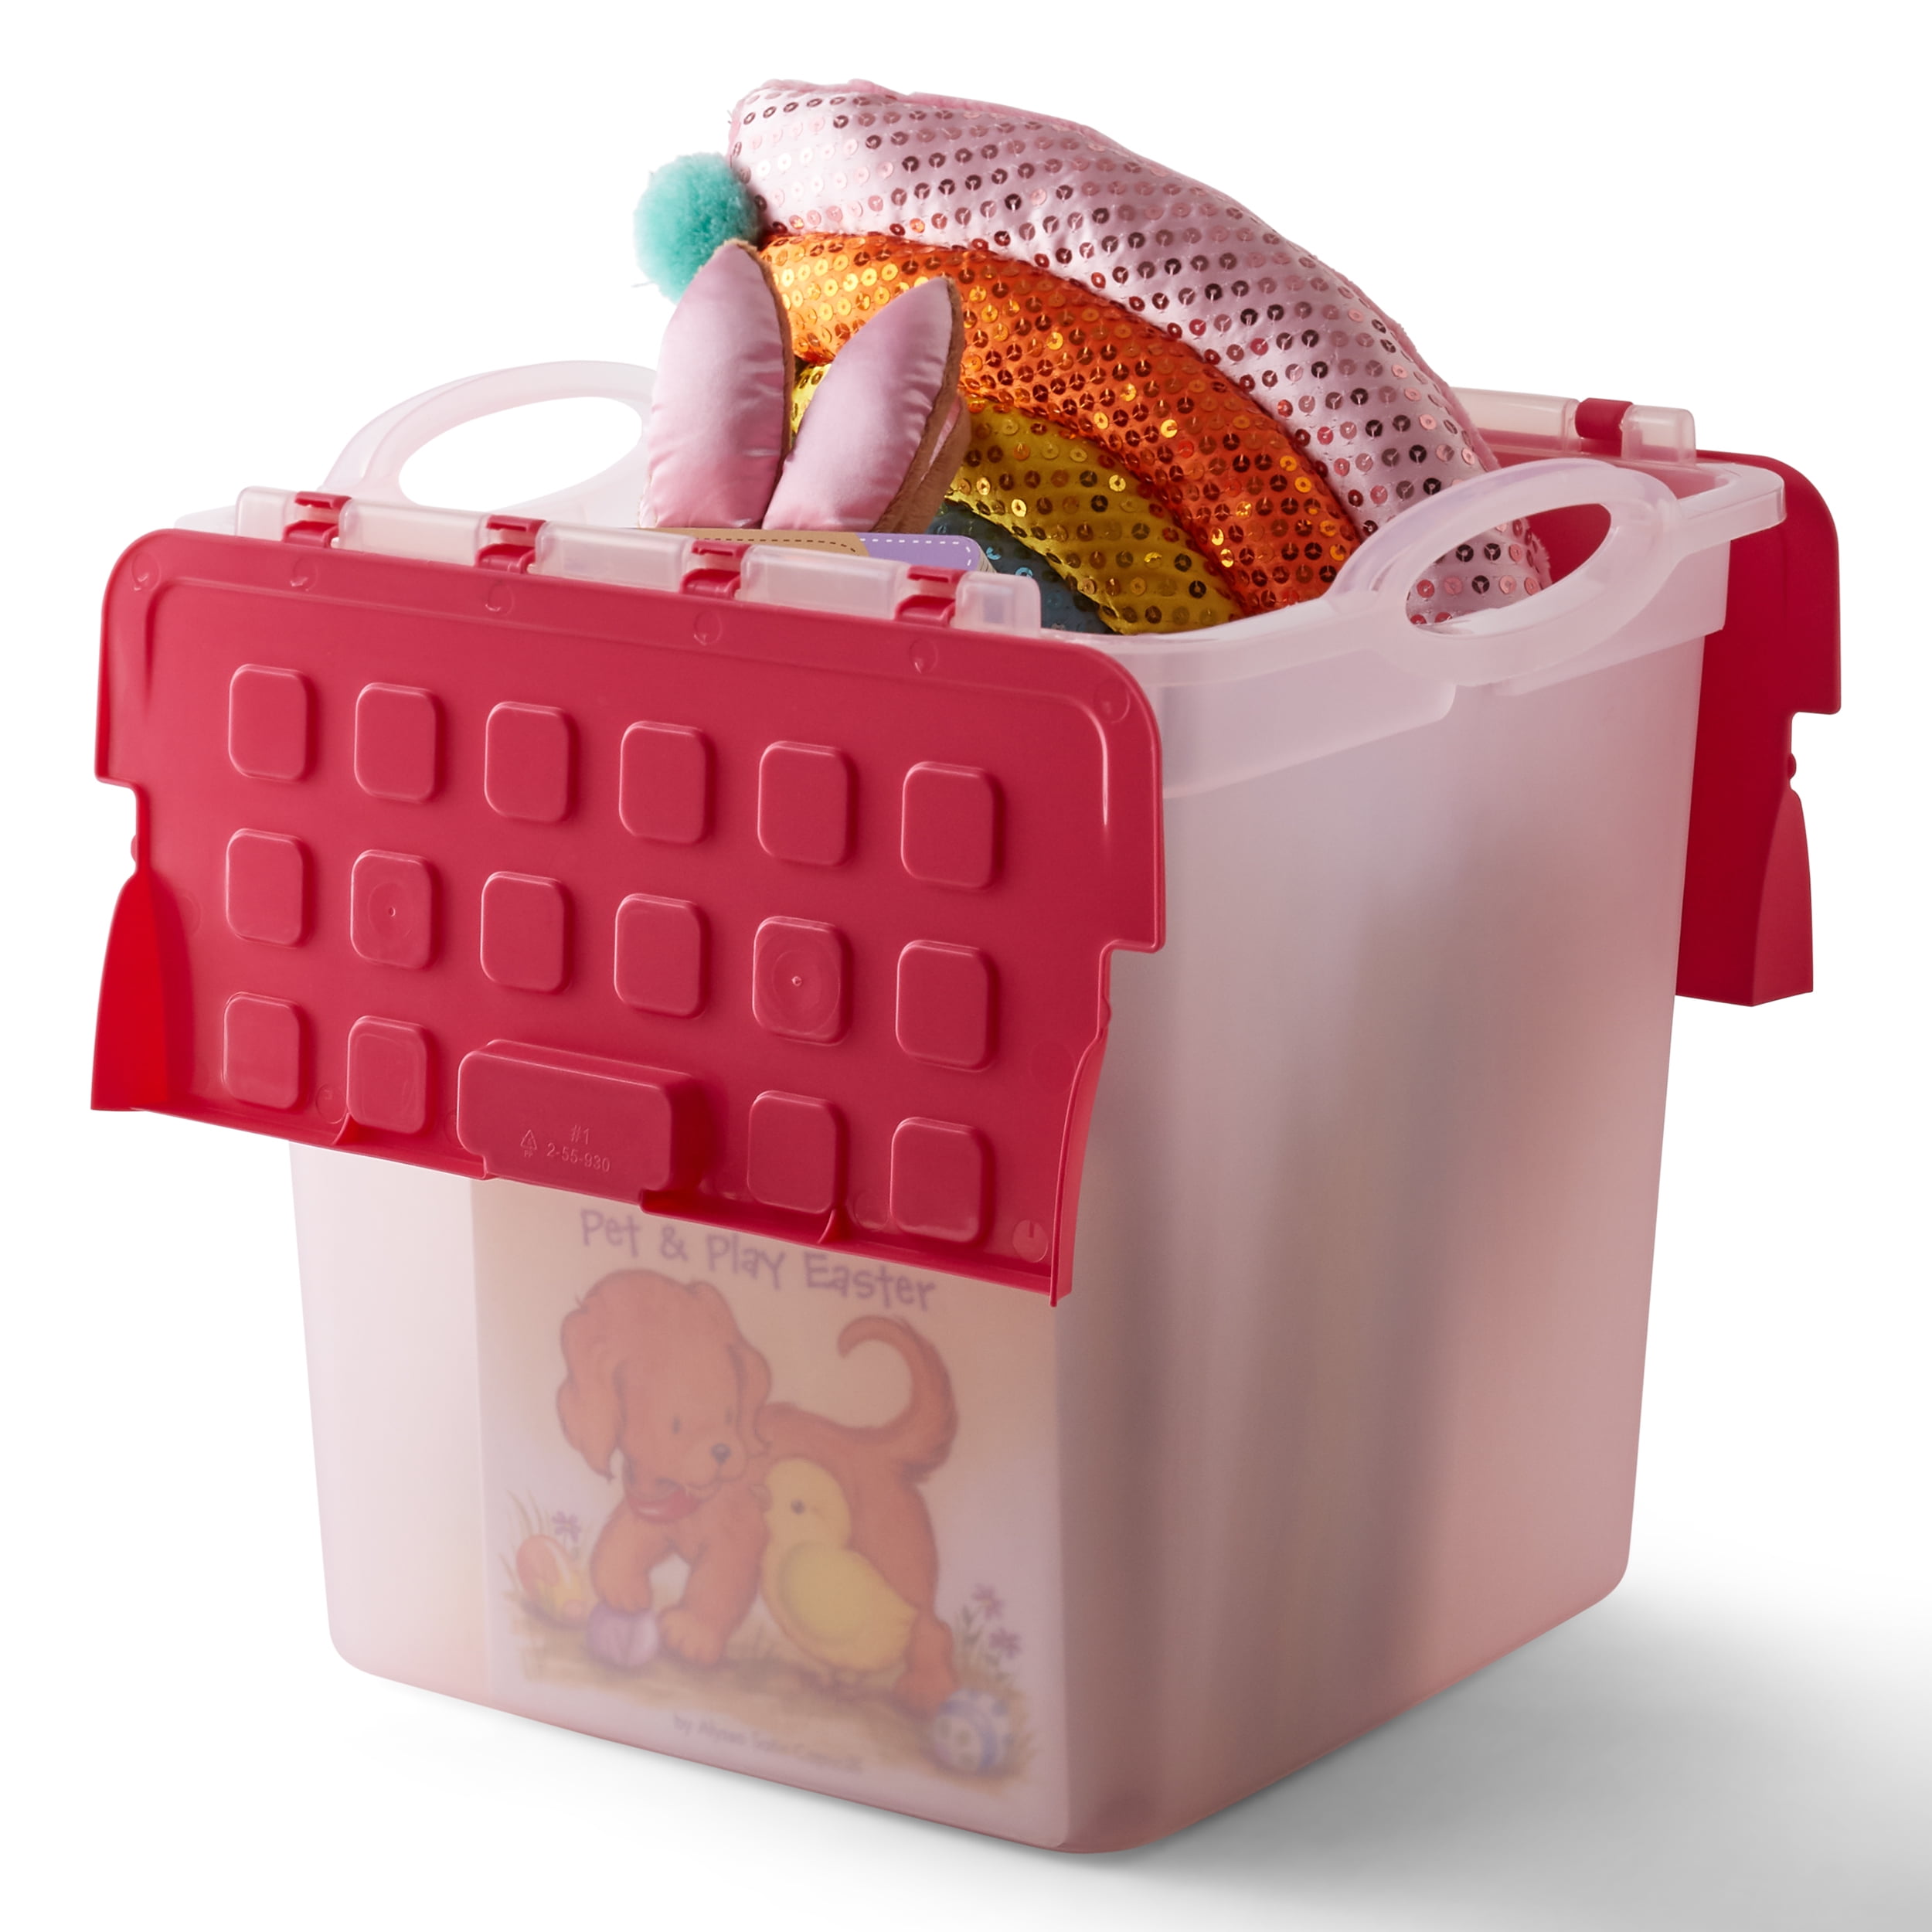 Your Zone Medium Storage Bin with Brick Play Lid, Pink - Set of 6